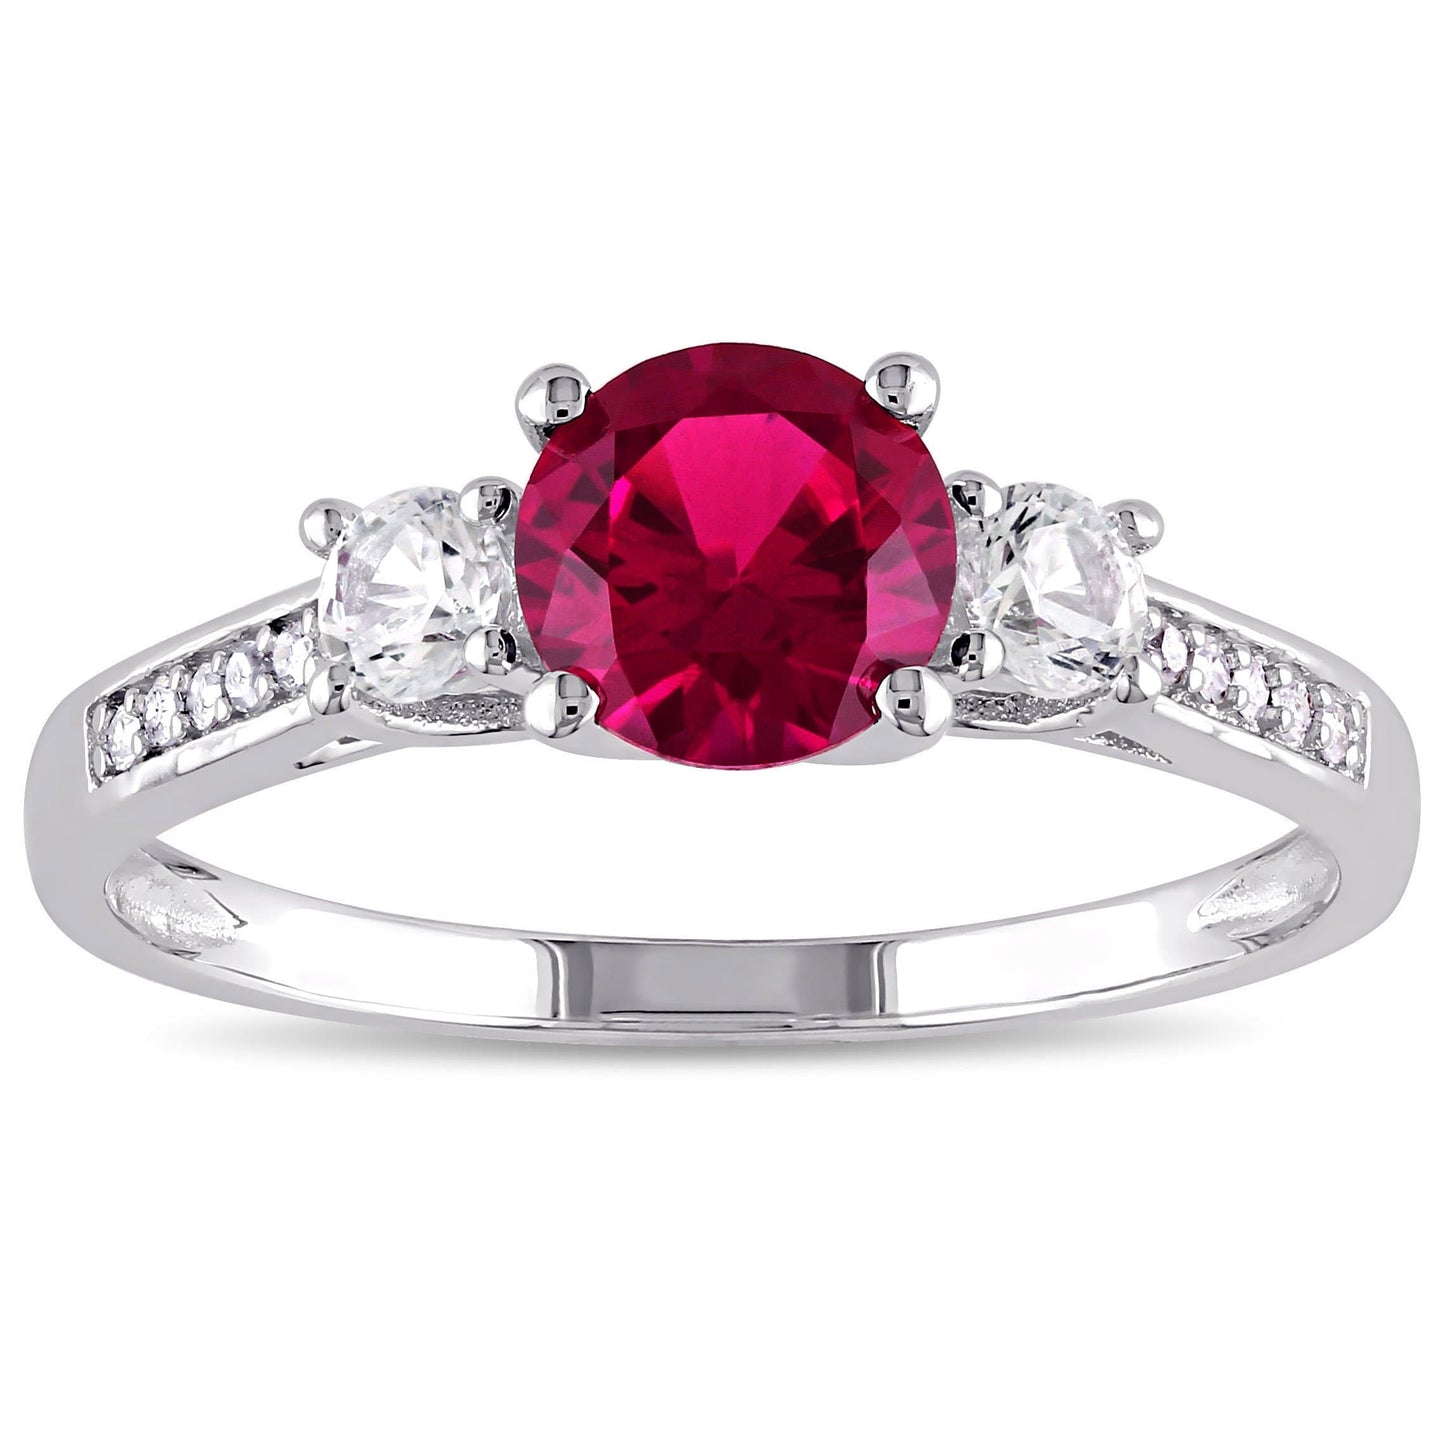 Sophia B 1 1/3ct Ruby, Sapphire & Diamond Ring in 10k White Gold